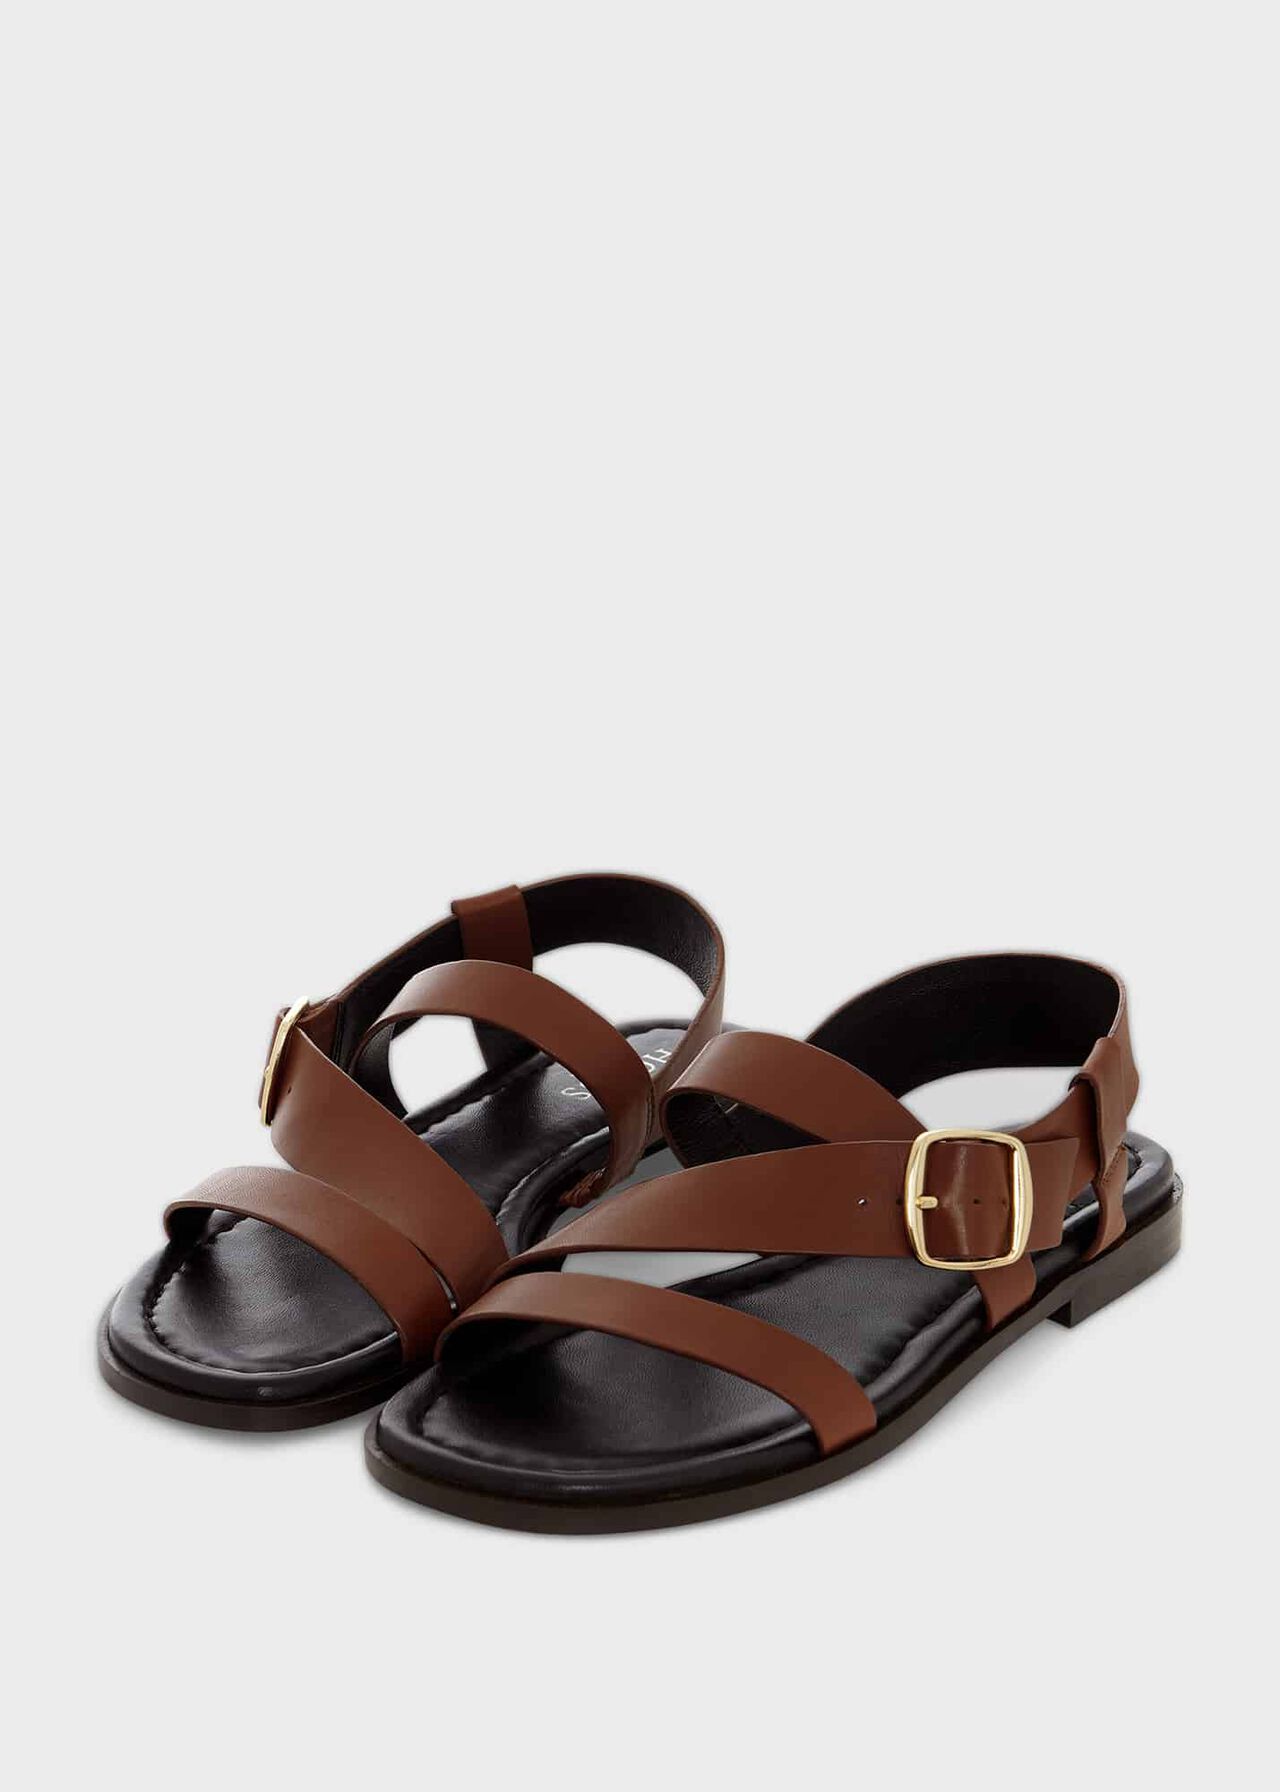 Brooke Leather Sandals, Tan, hi-res